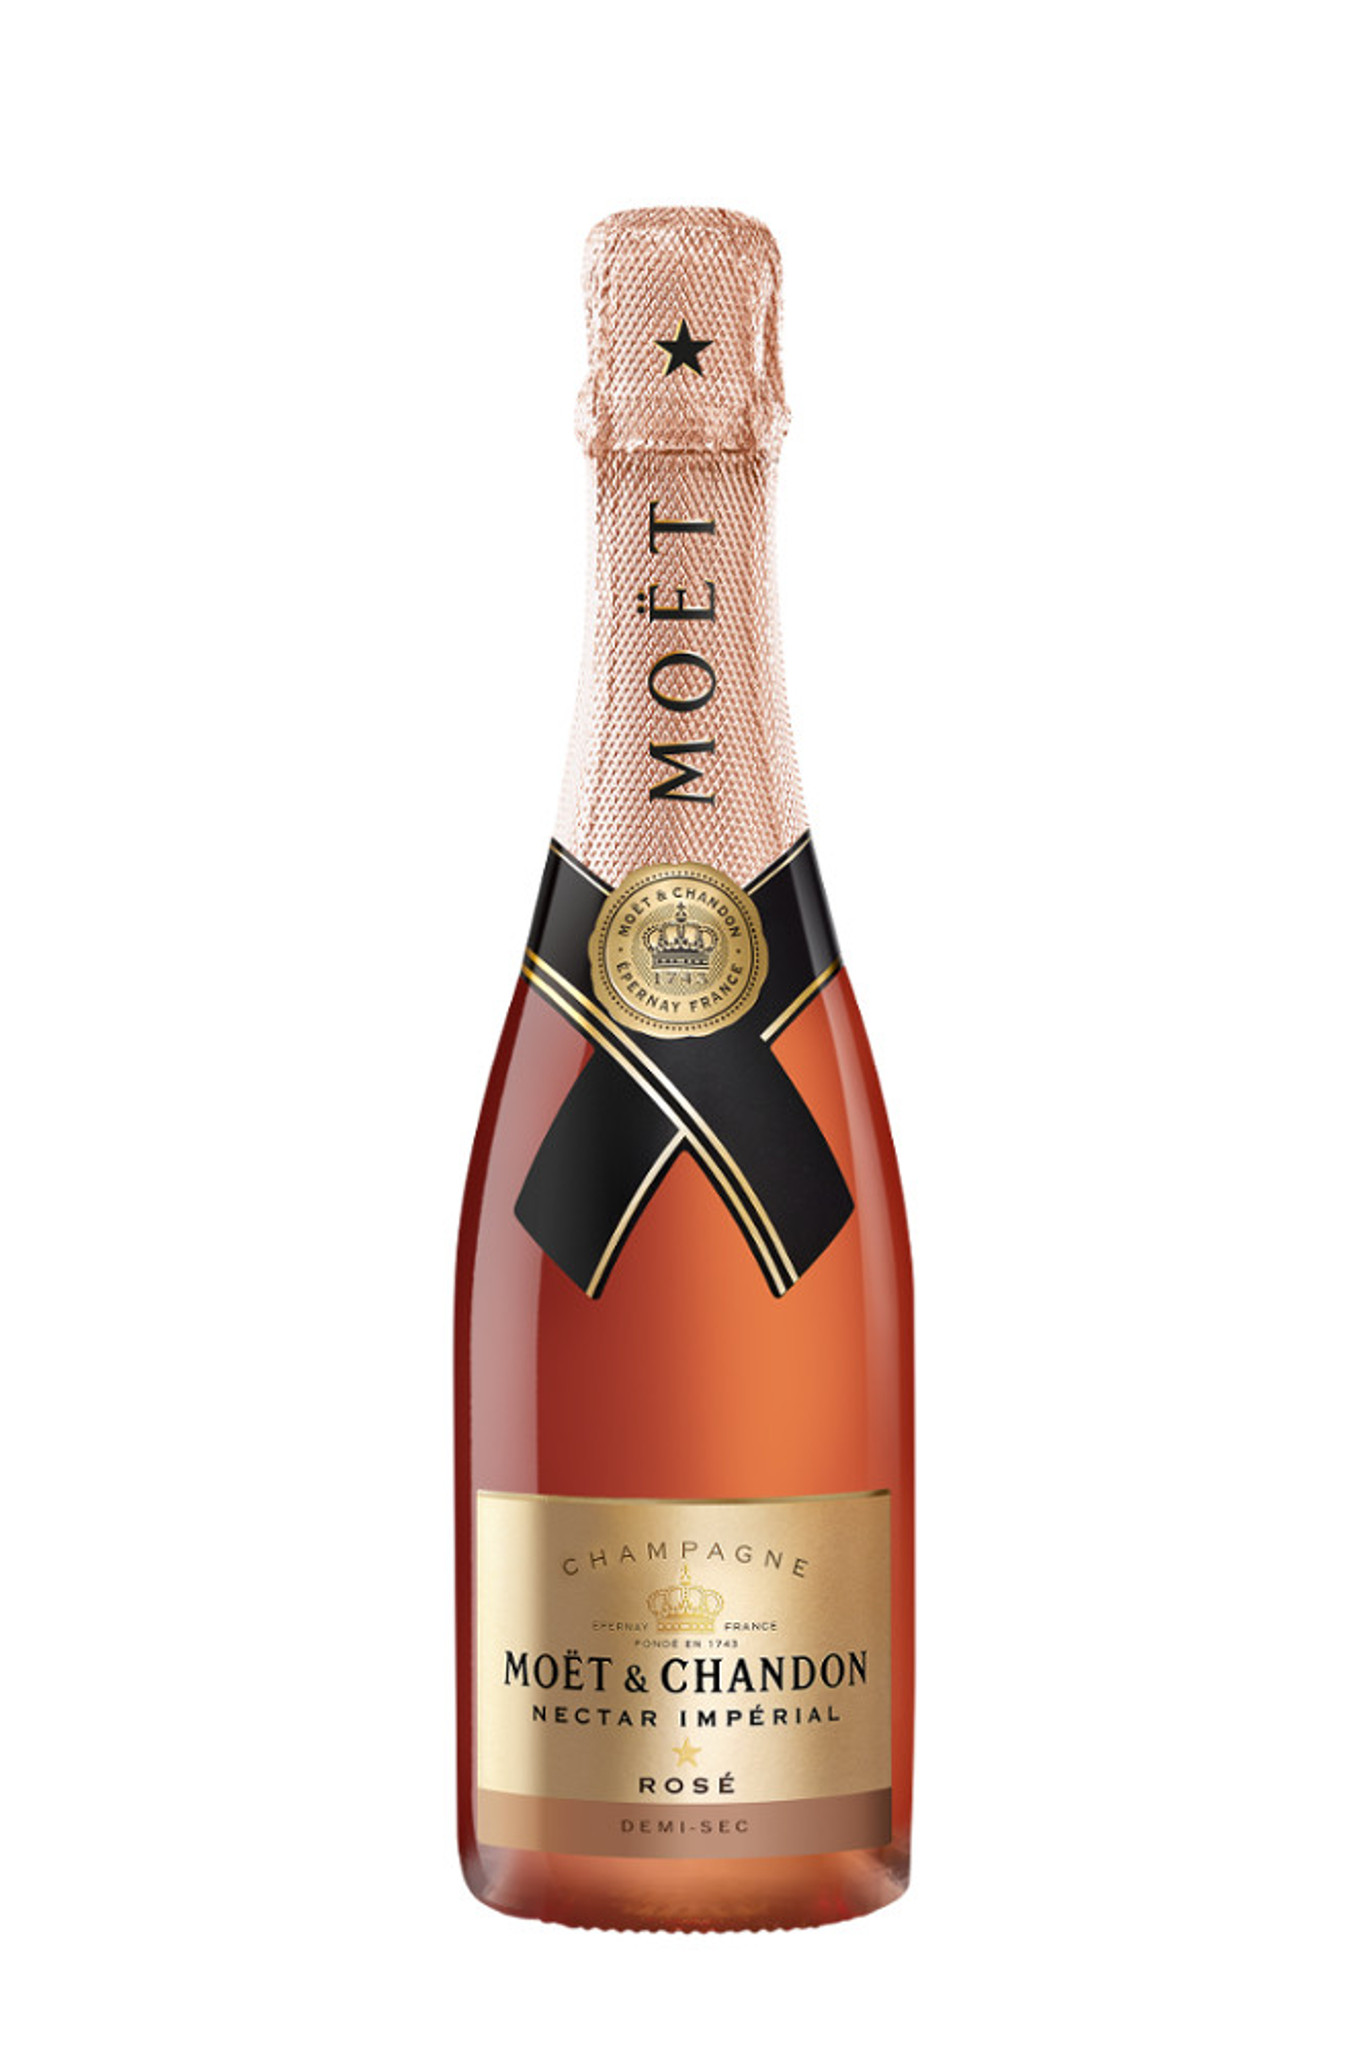 Moet & Chandon Nectar Imperial Rose (375ml Champagne Premier - Bottle) Half